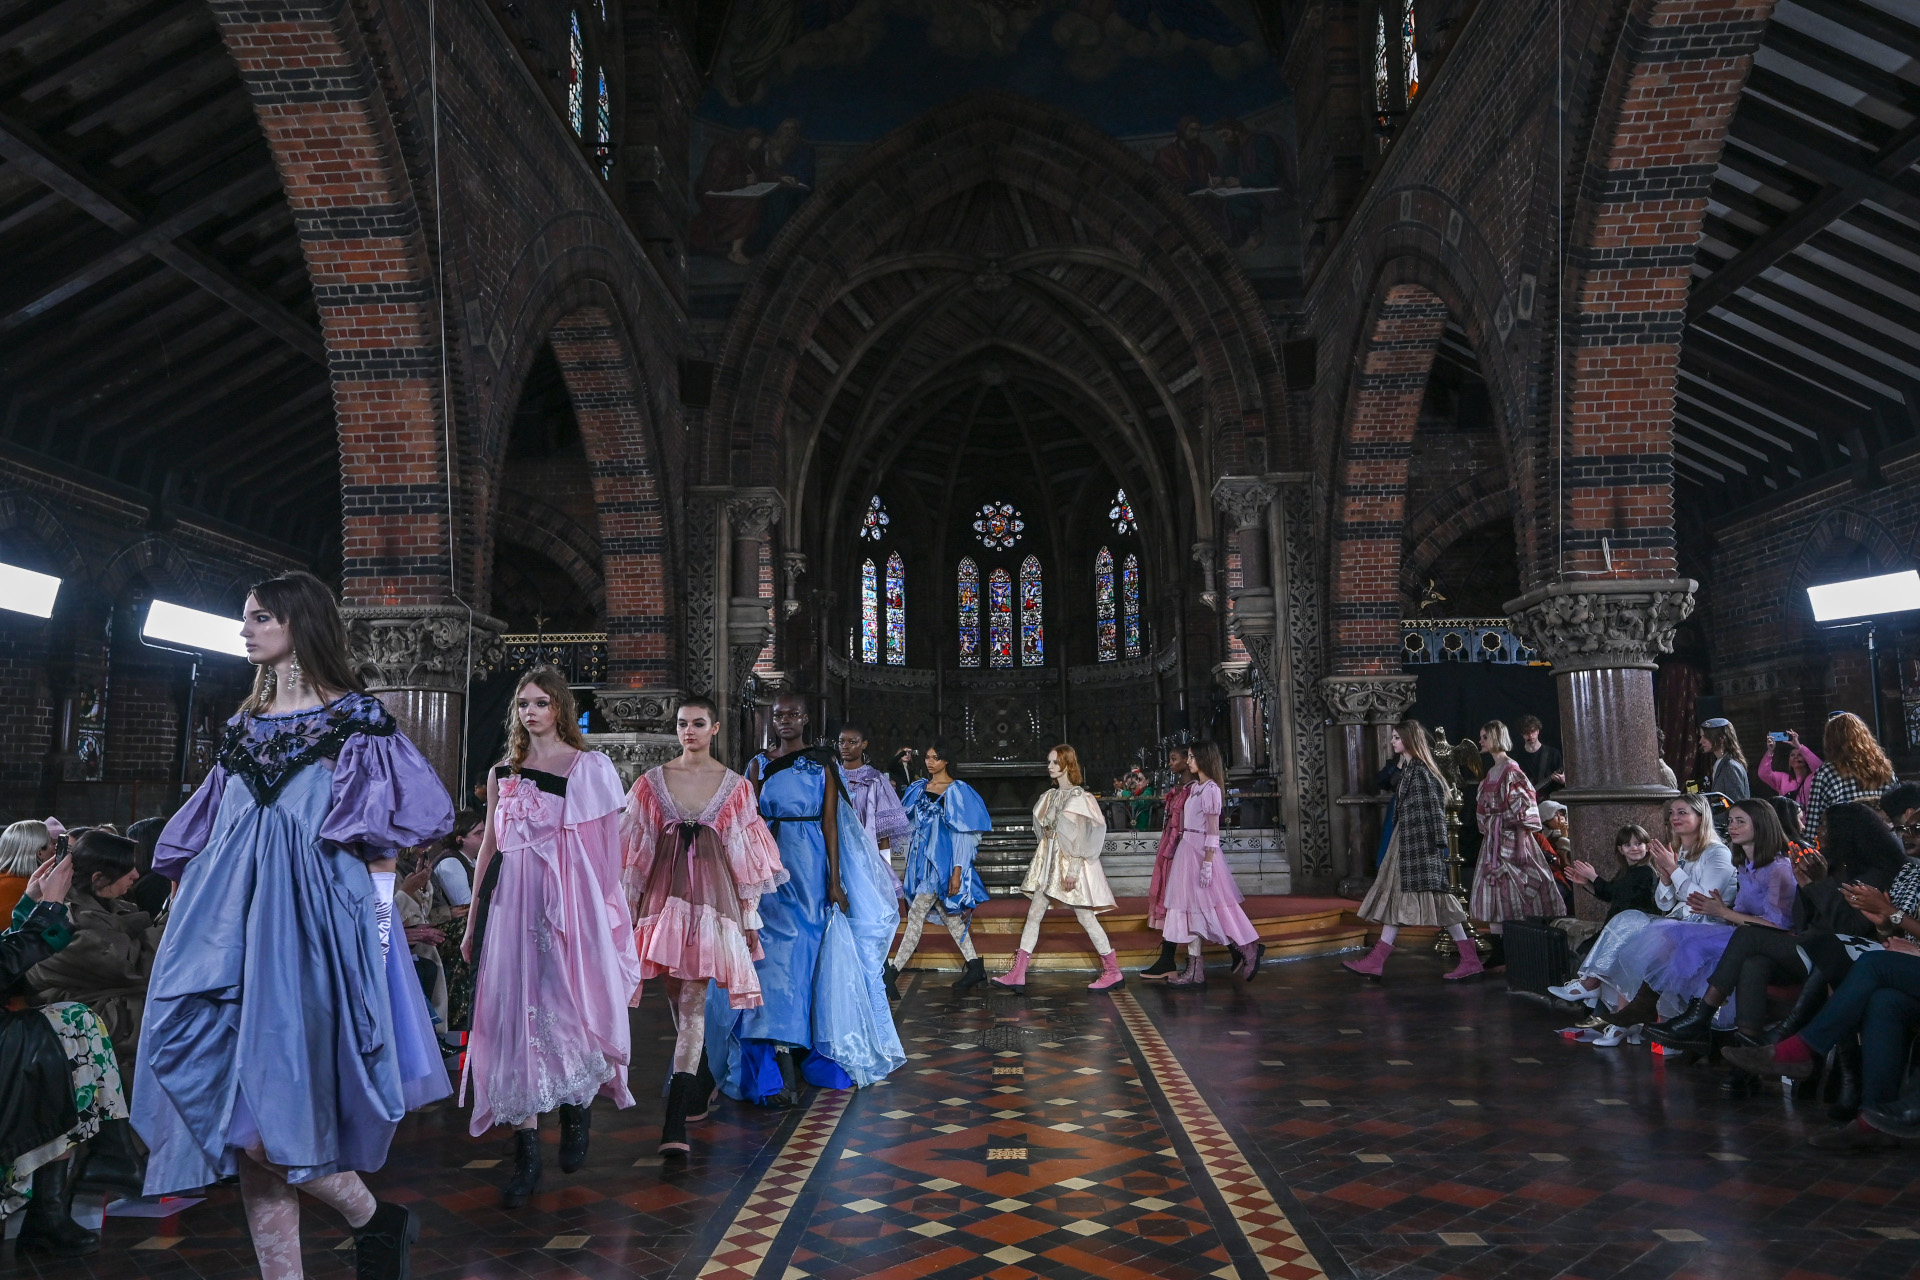 Models in colourful clothing walking through church